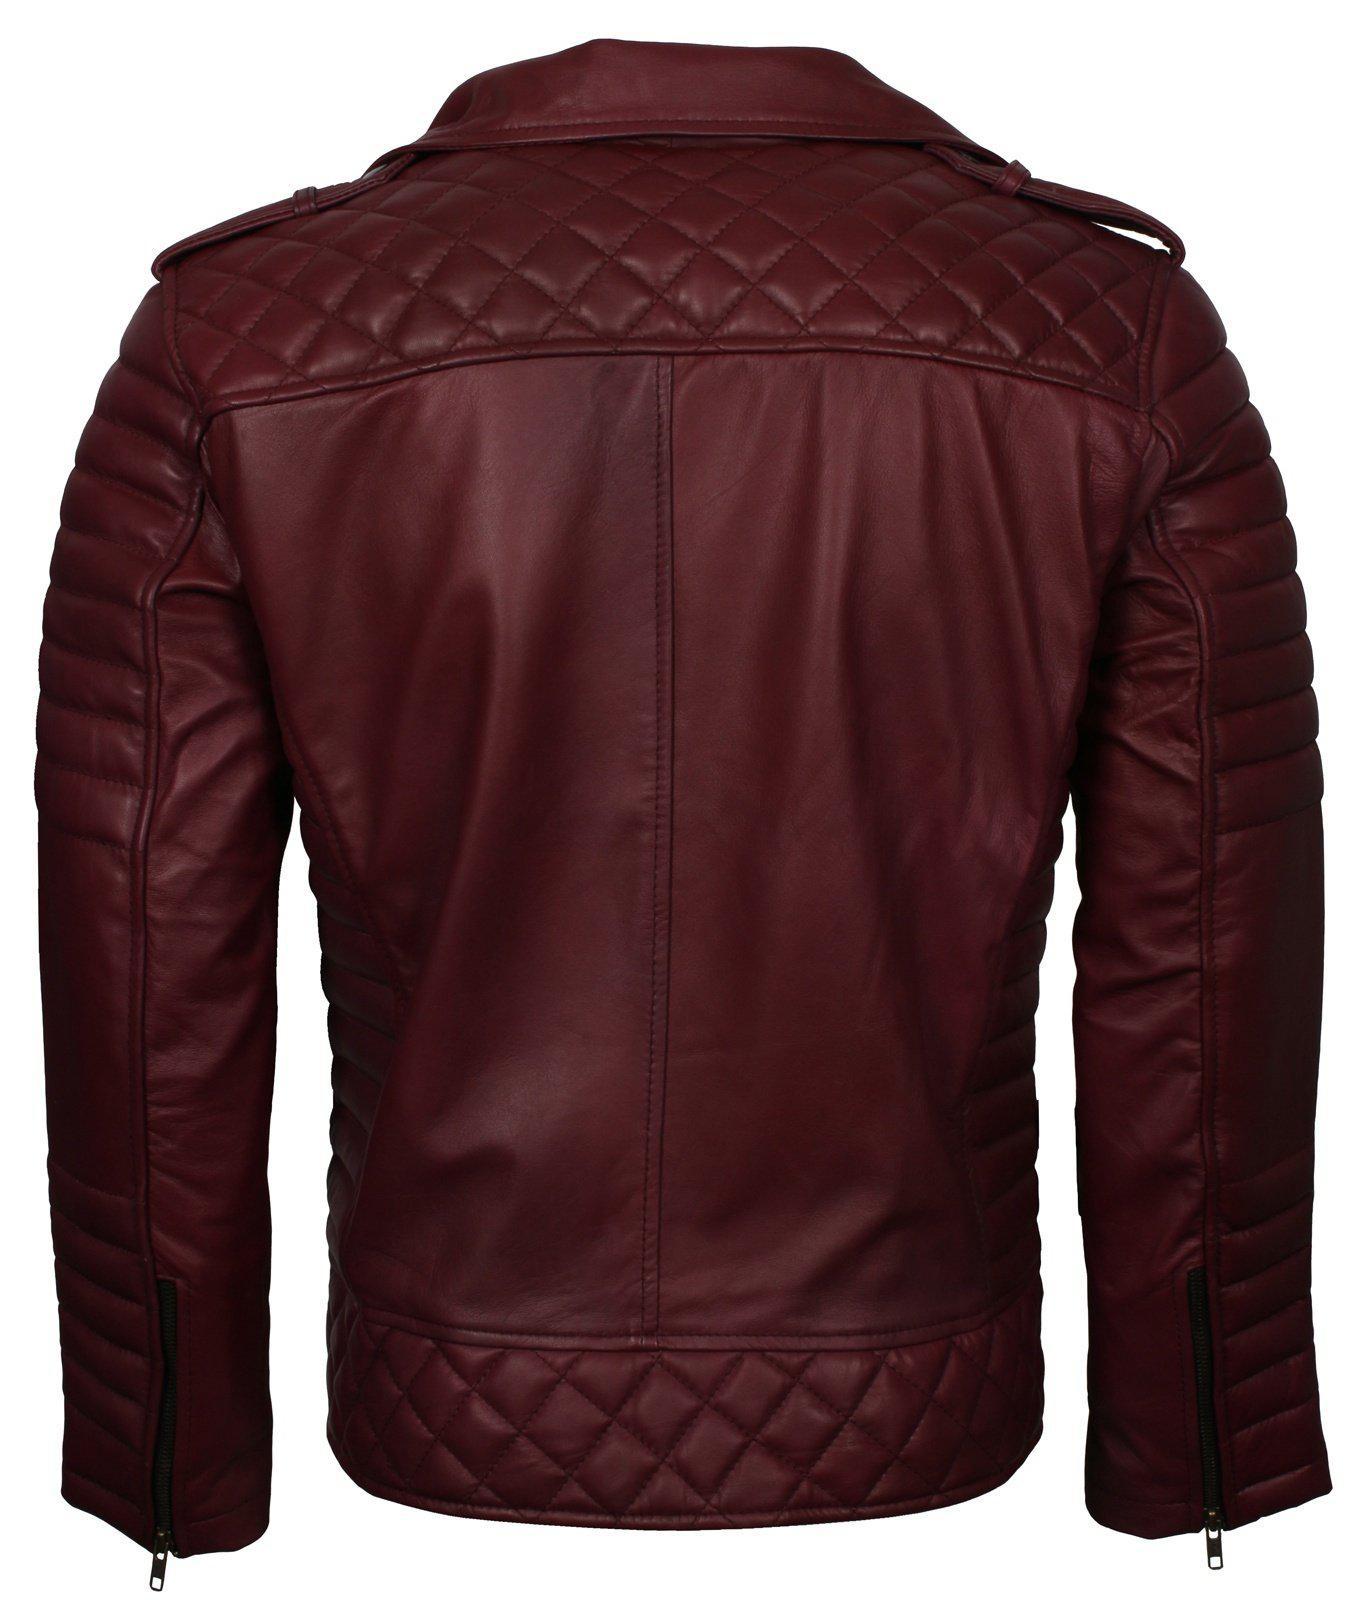 Maroon Leather Jacket with Diamond Pattern 